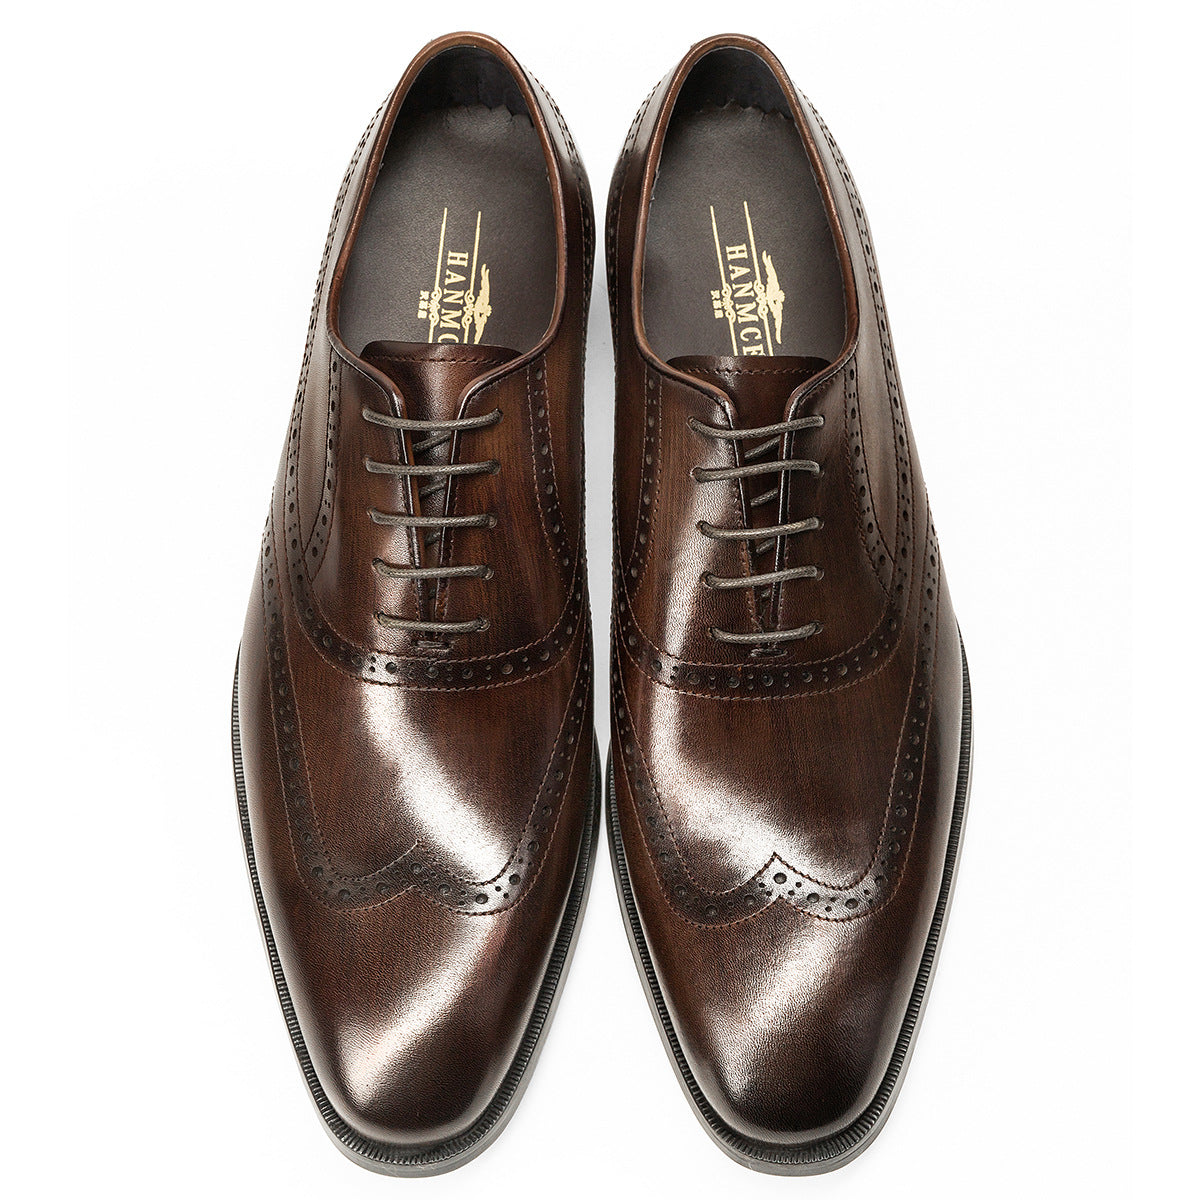 Men's Business Formal Oxford Brogue Cowhide Plus Leather Shoes